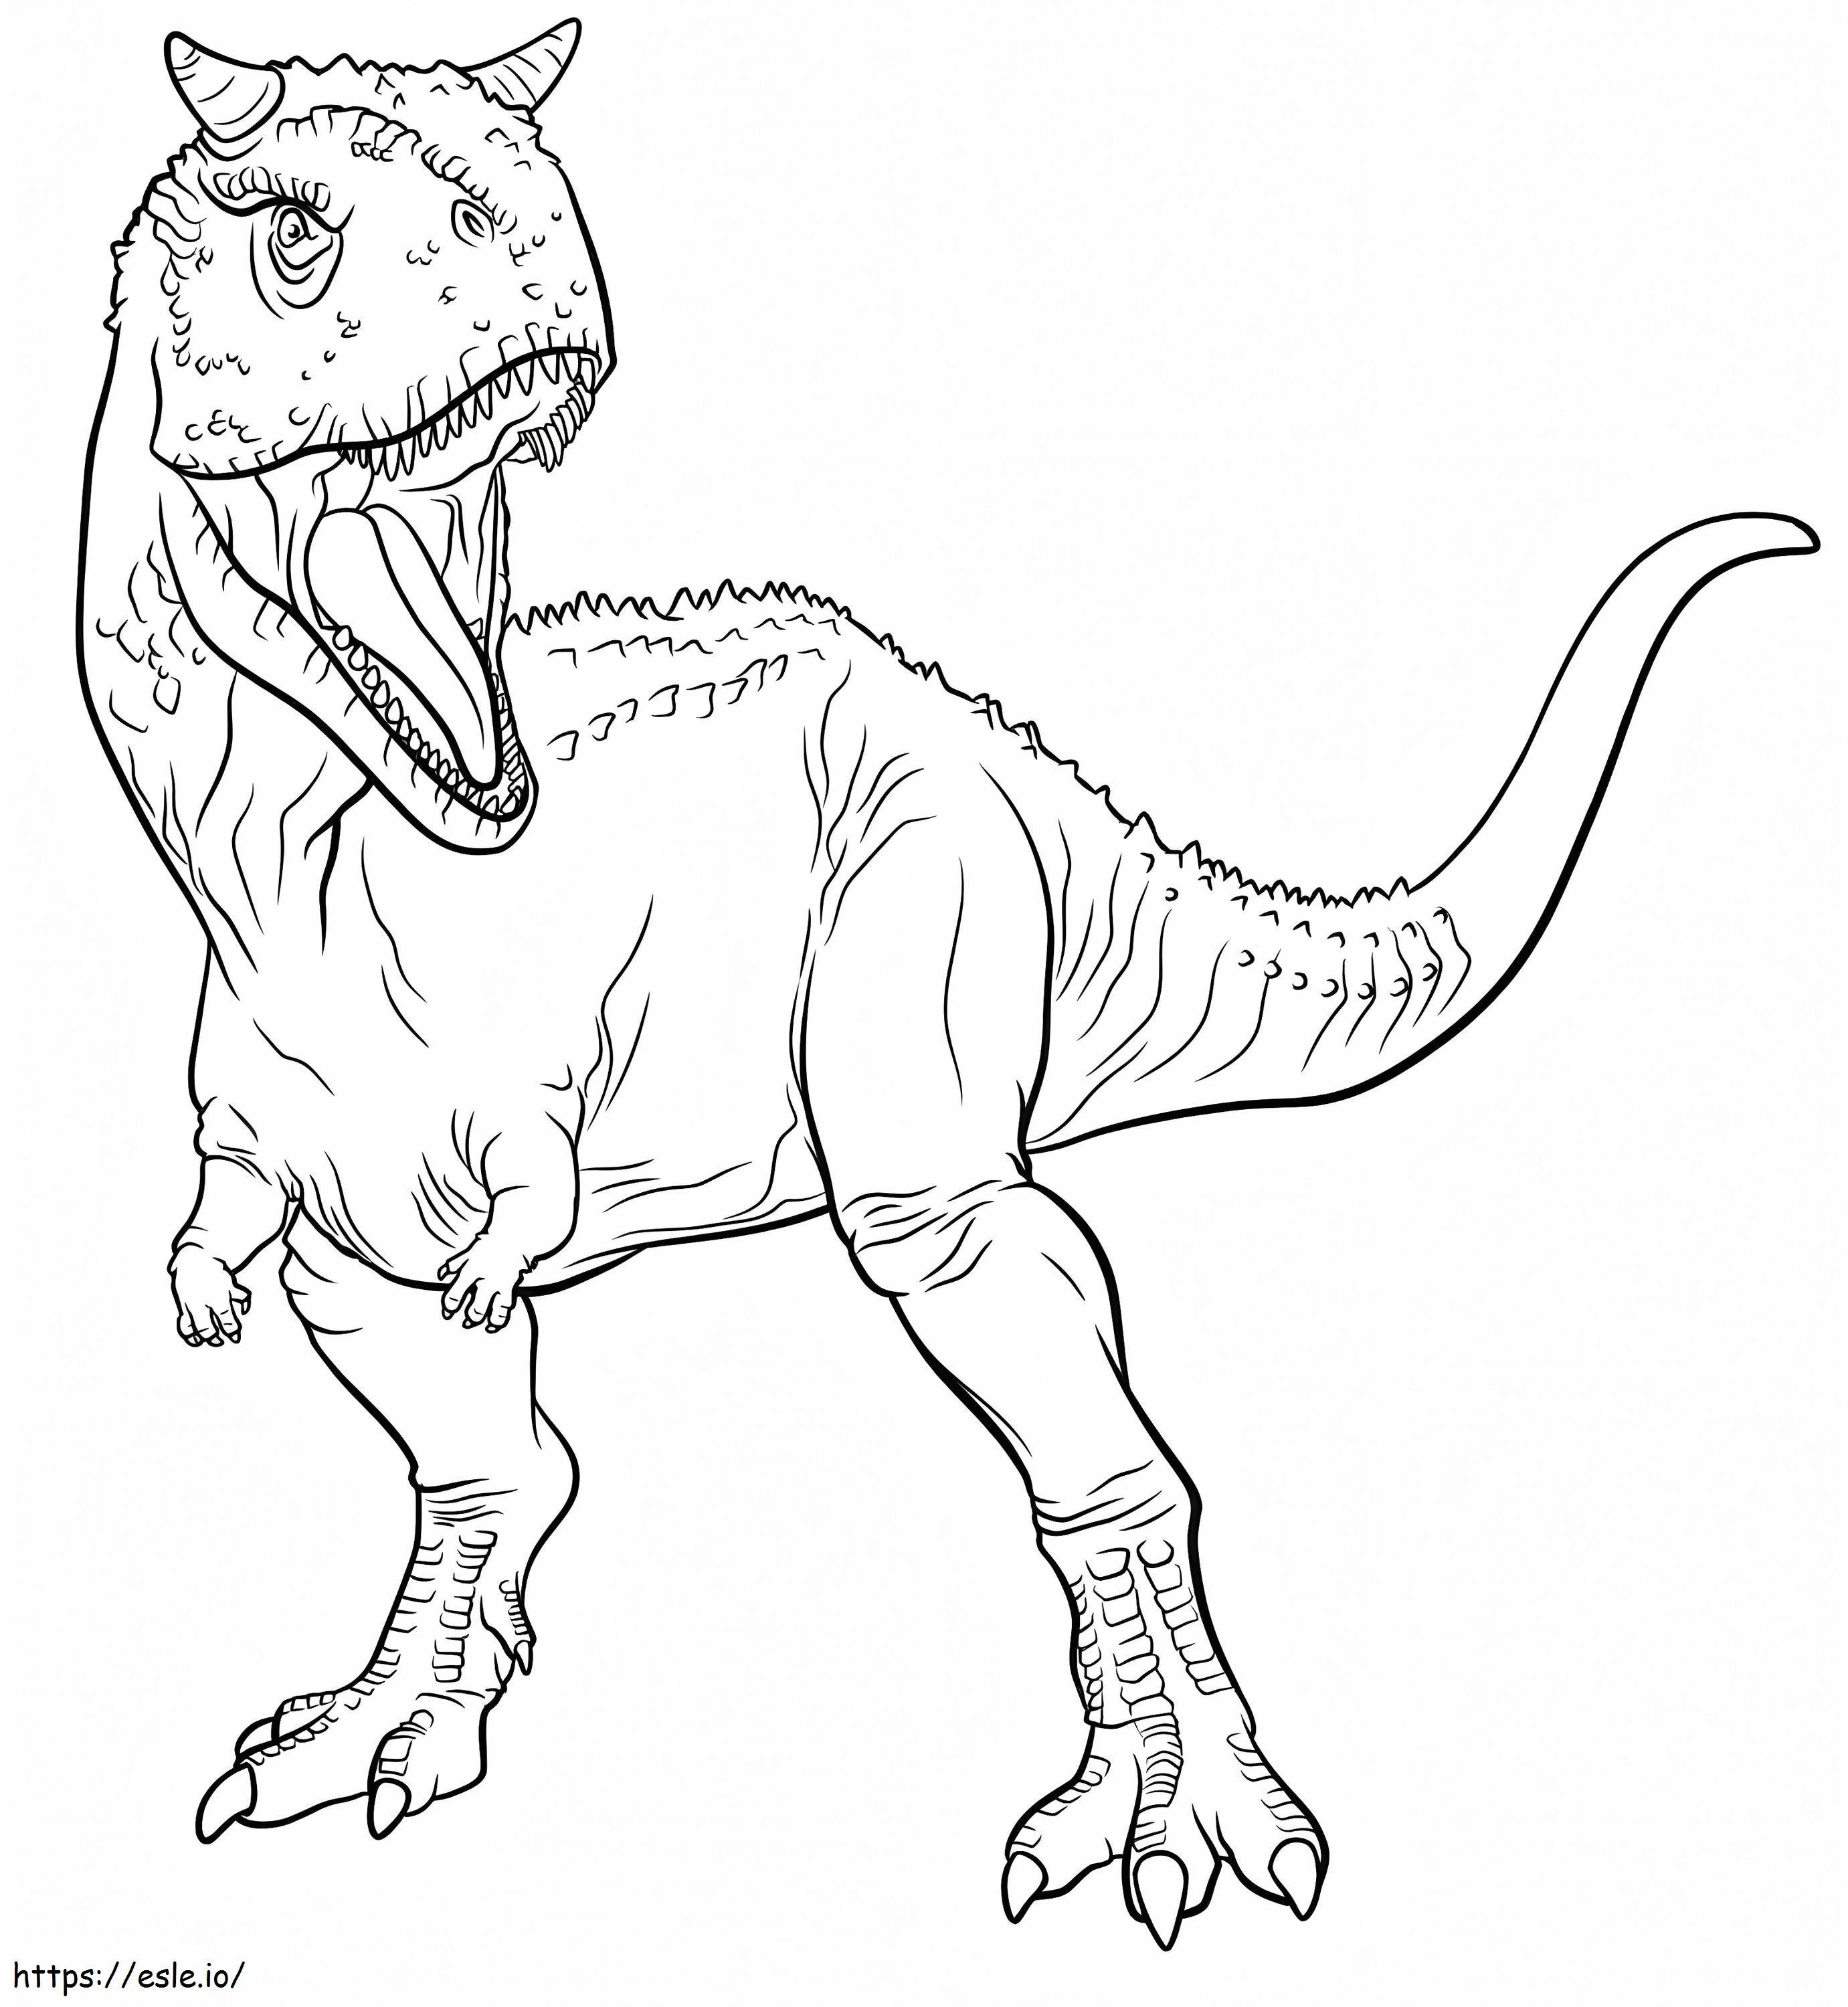 Jurassic World Carnotaurus coloring page